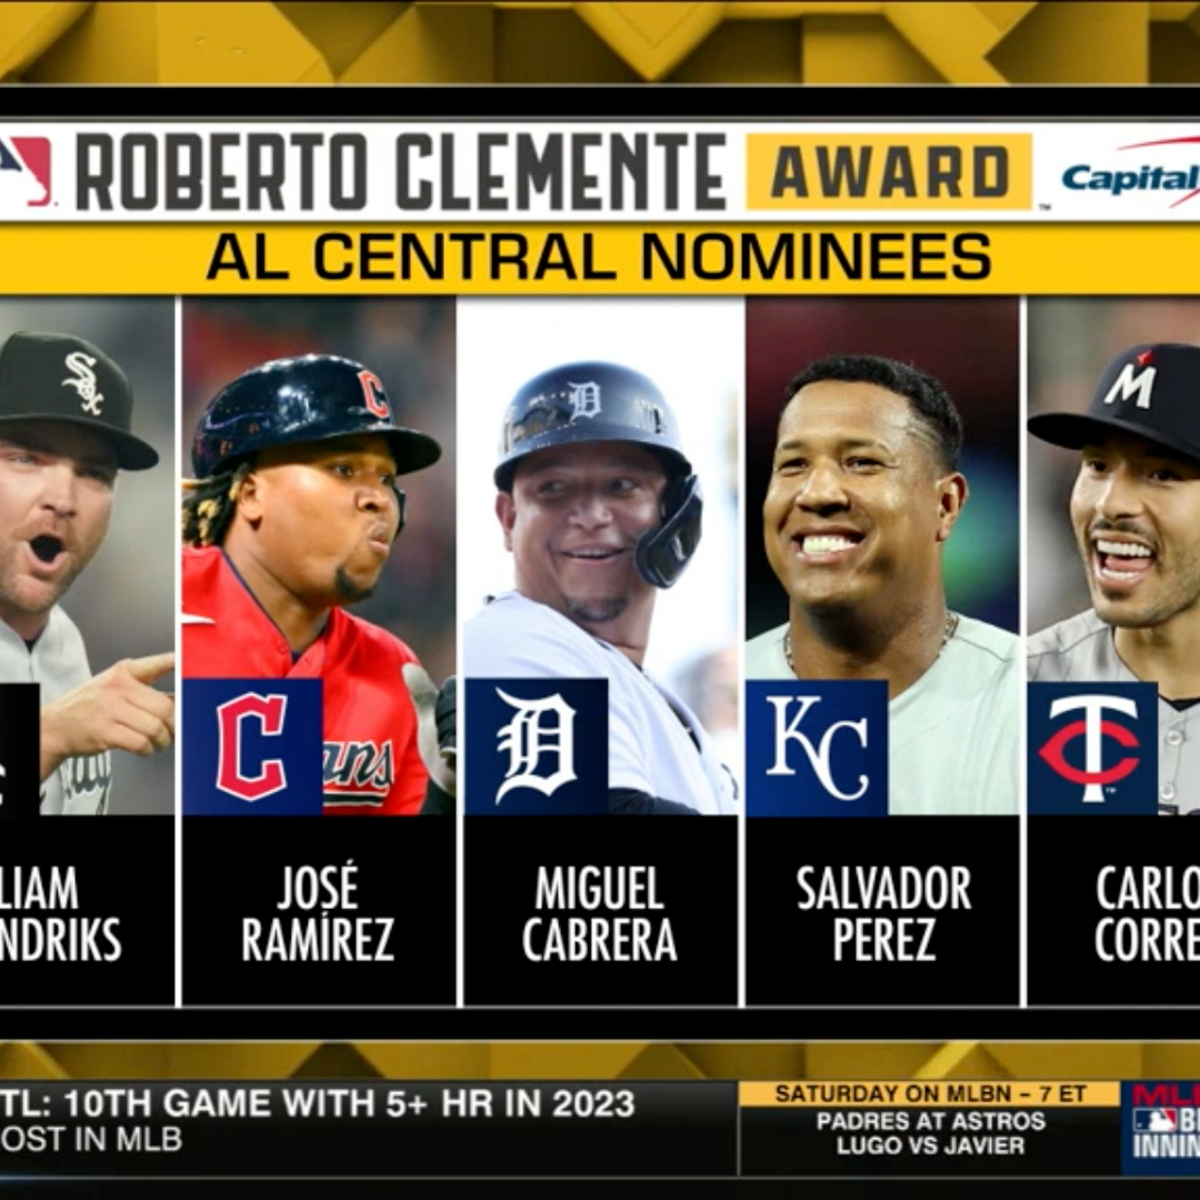 Roberto Clemente Award 2022 nominees